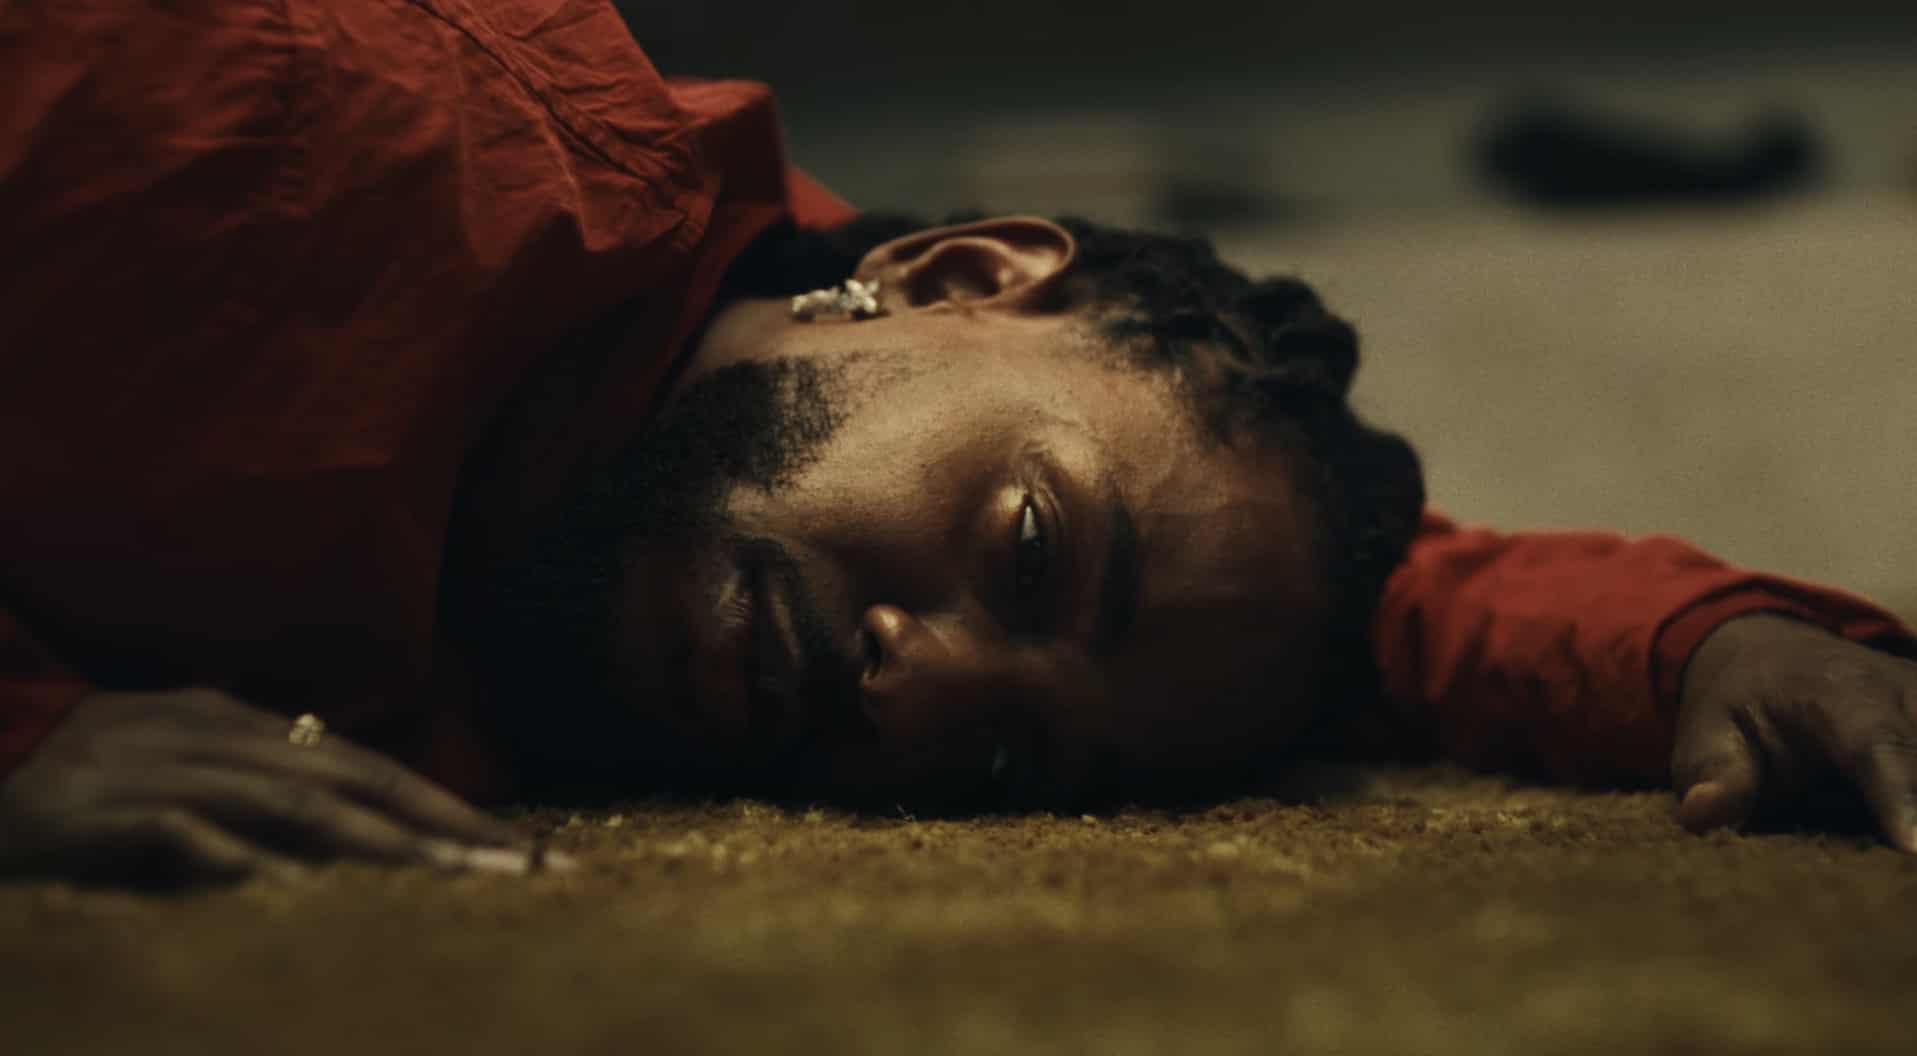 Kendrick Lamar “Rich Spirit” Directed by Calmatic